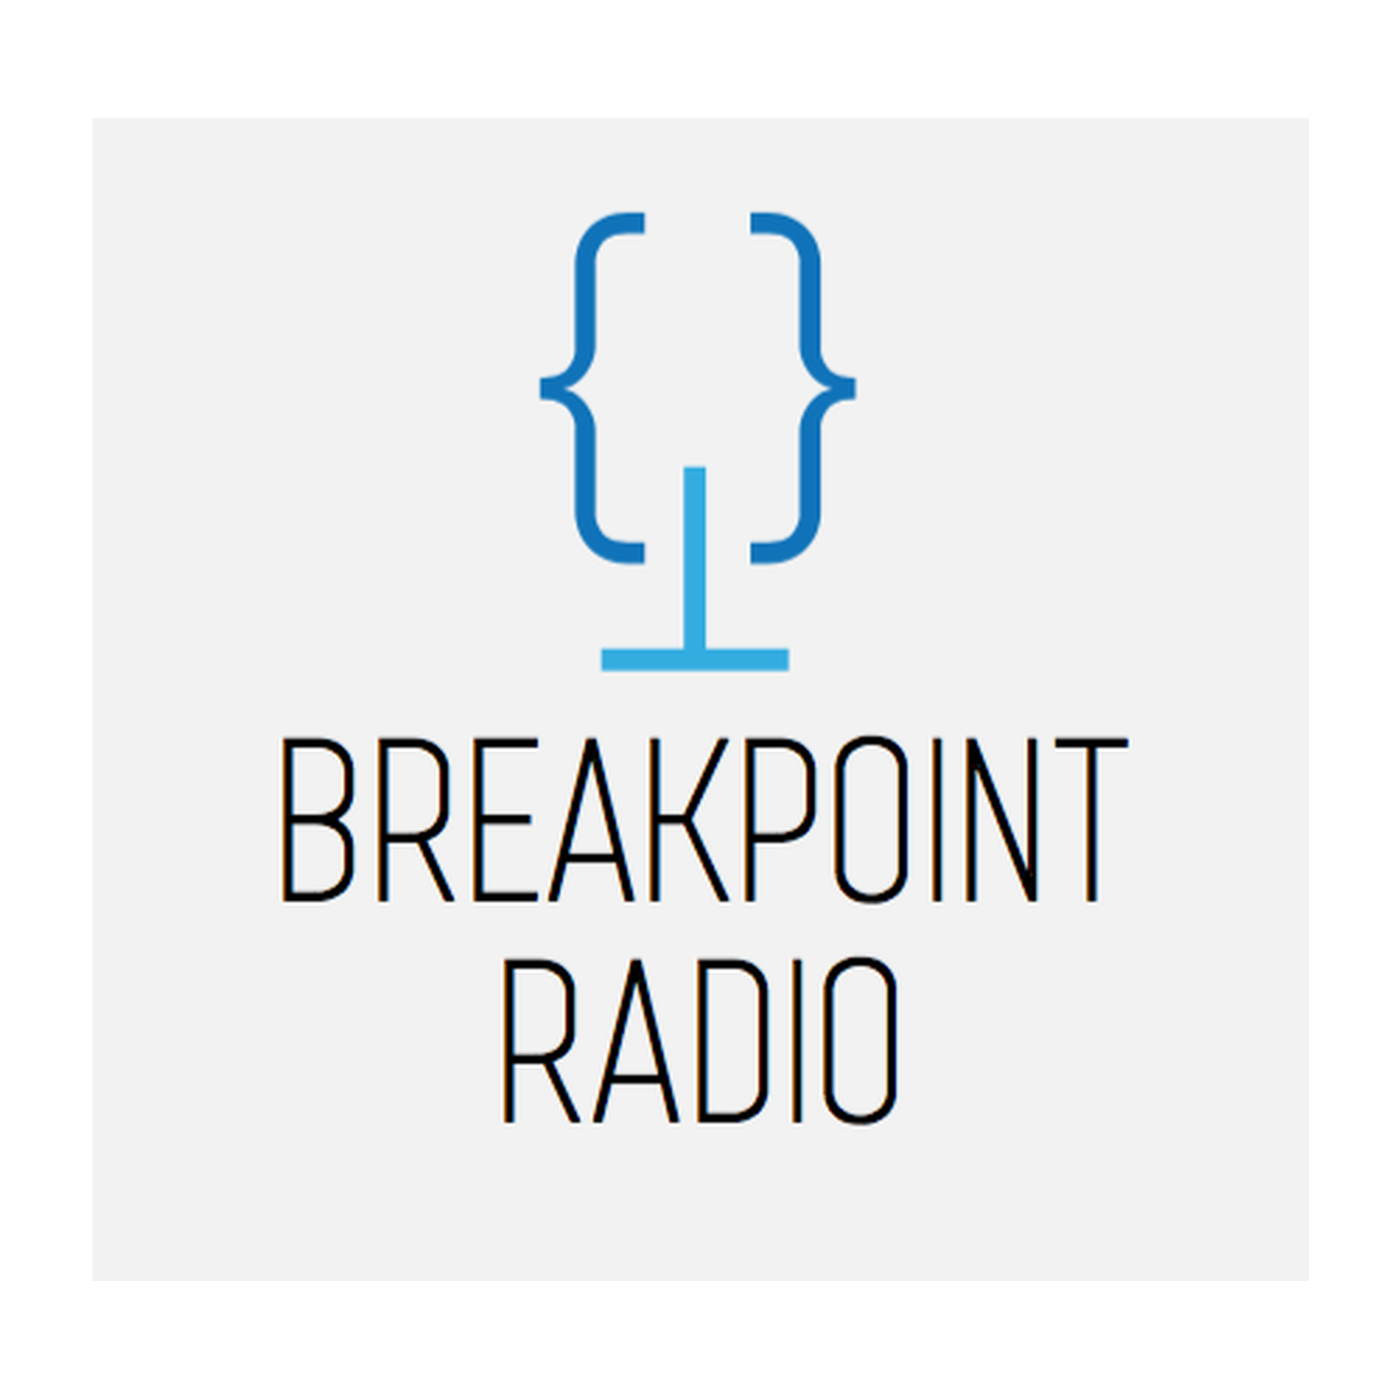 Breakpoint radio logo